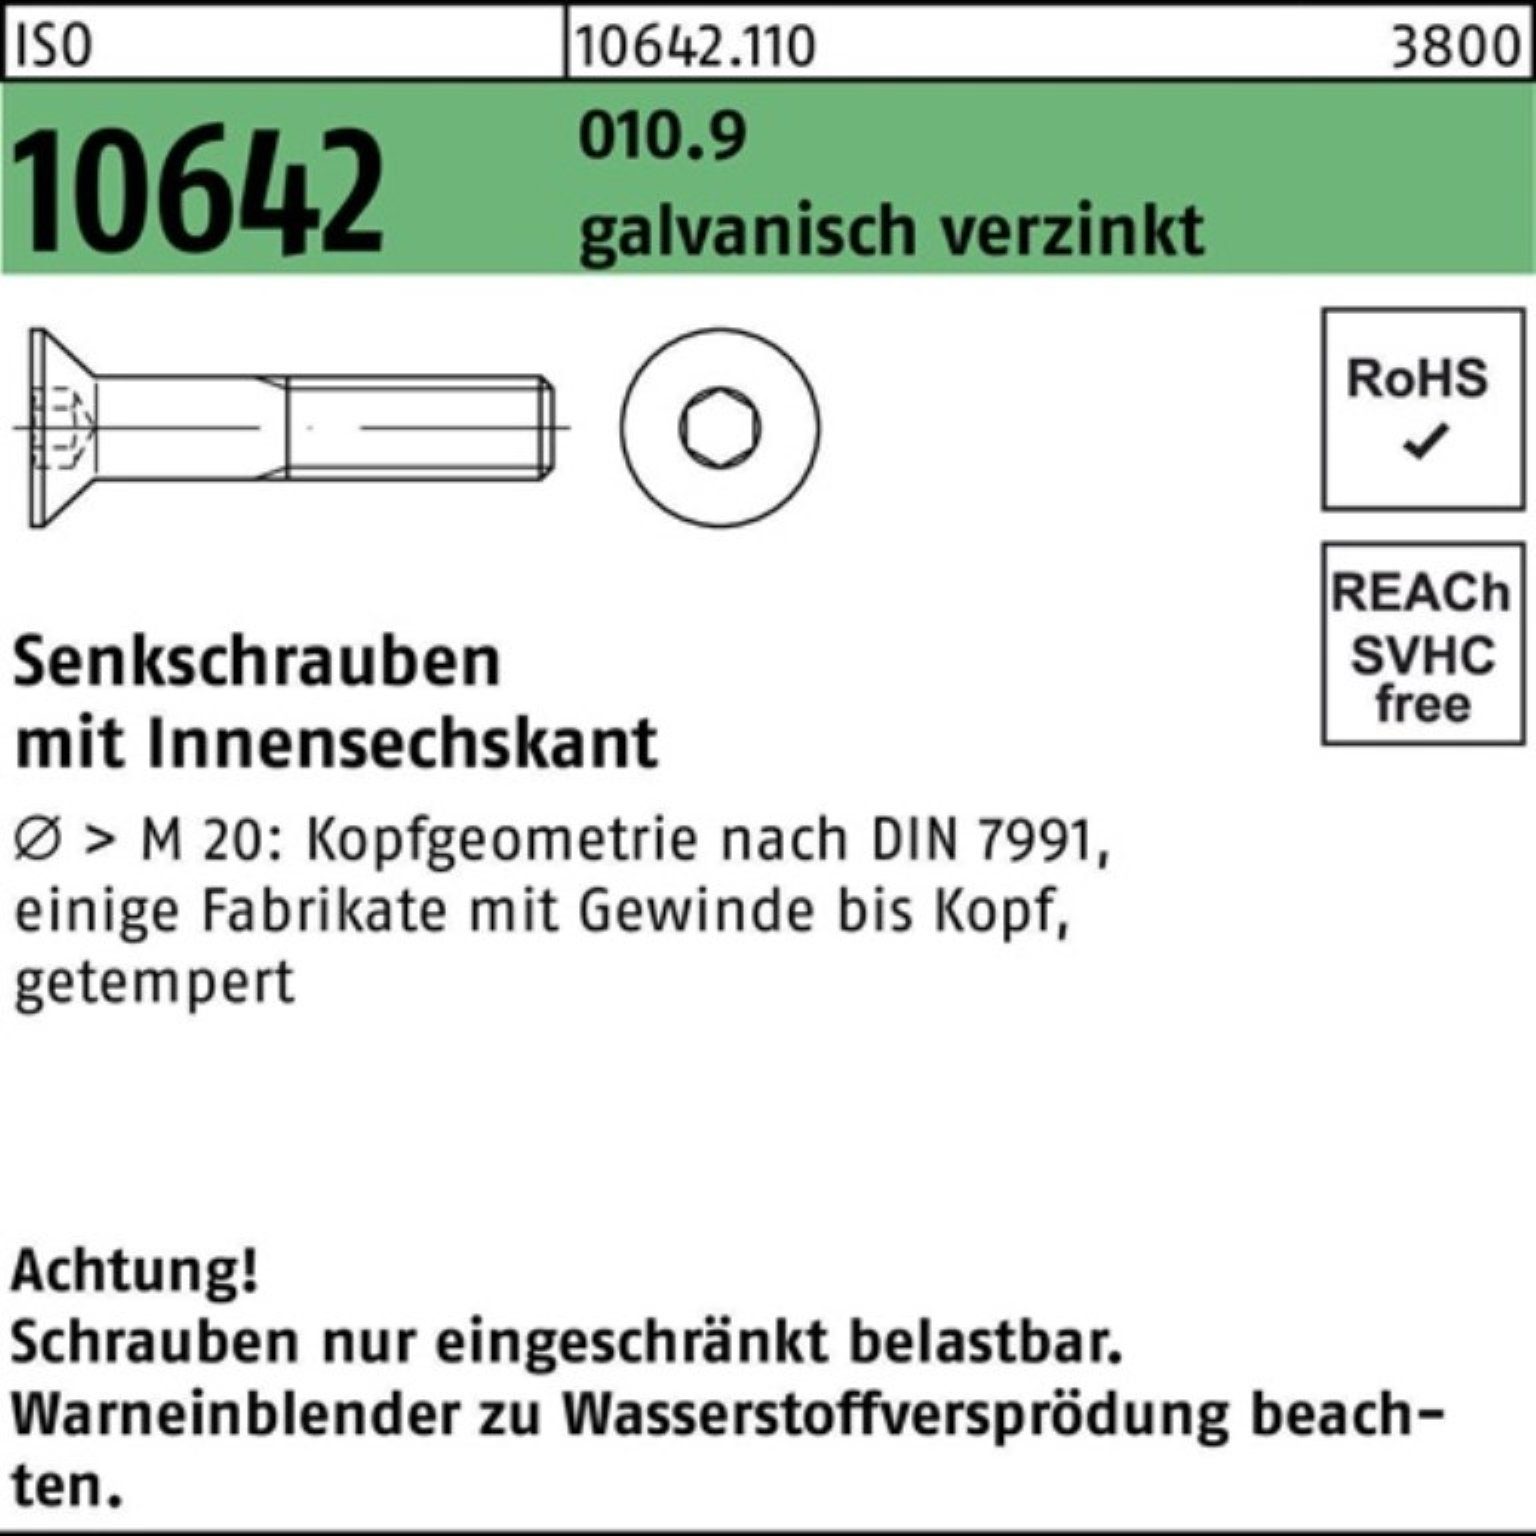 Reyher Senkschraube 200er Senkschraube galv.verz. ISO Pack 40 20 10642 010.9 Innen-6kt M8x